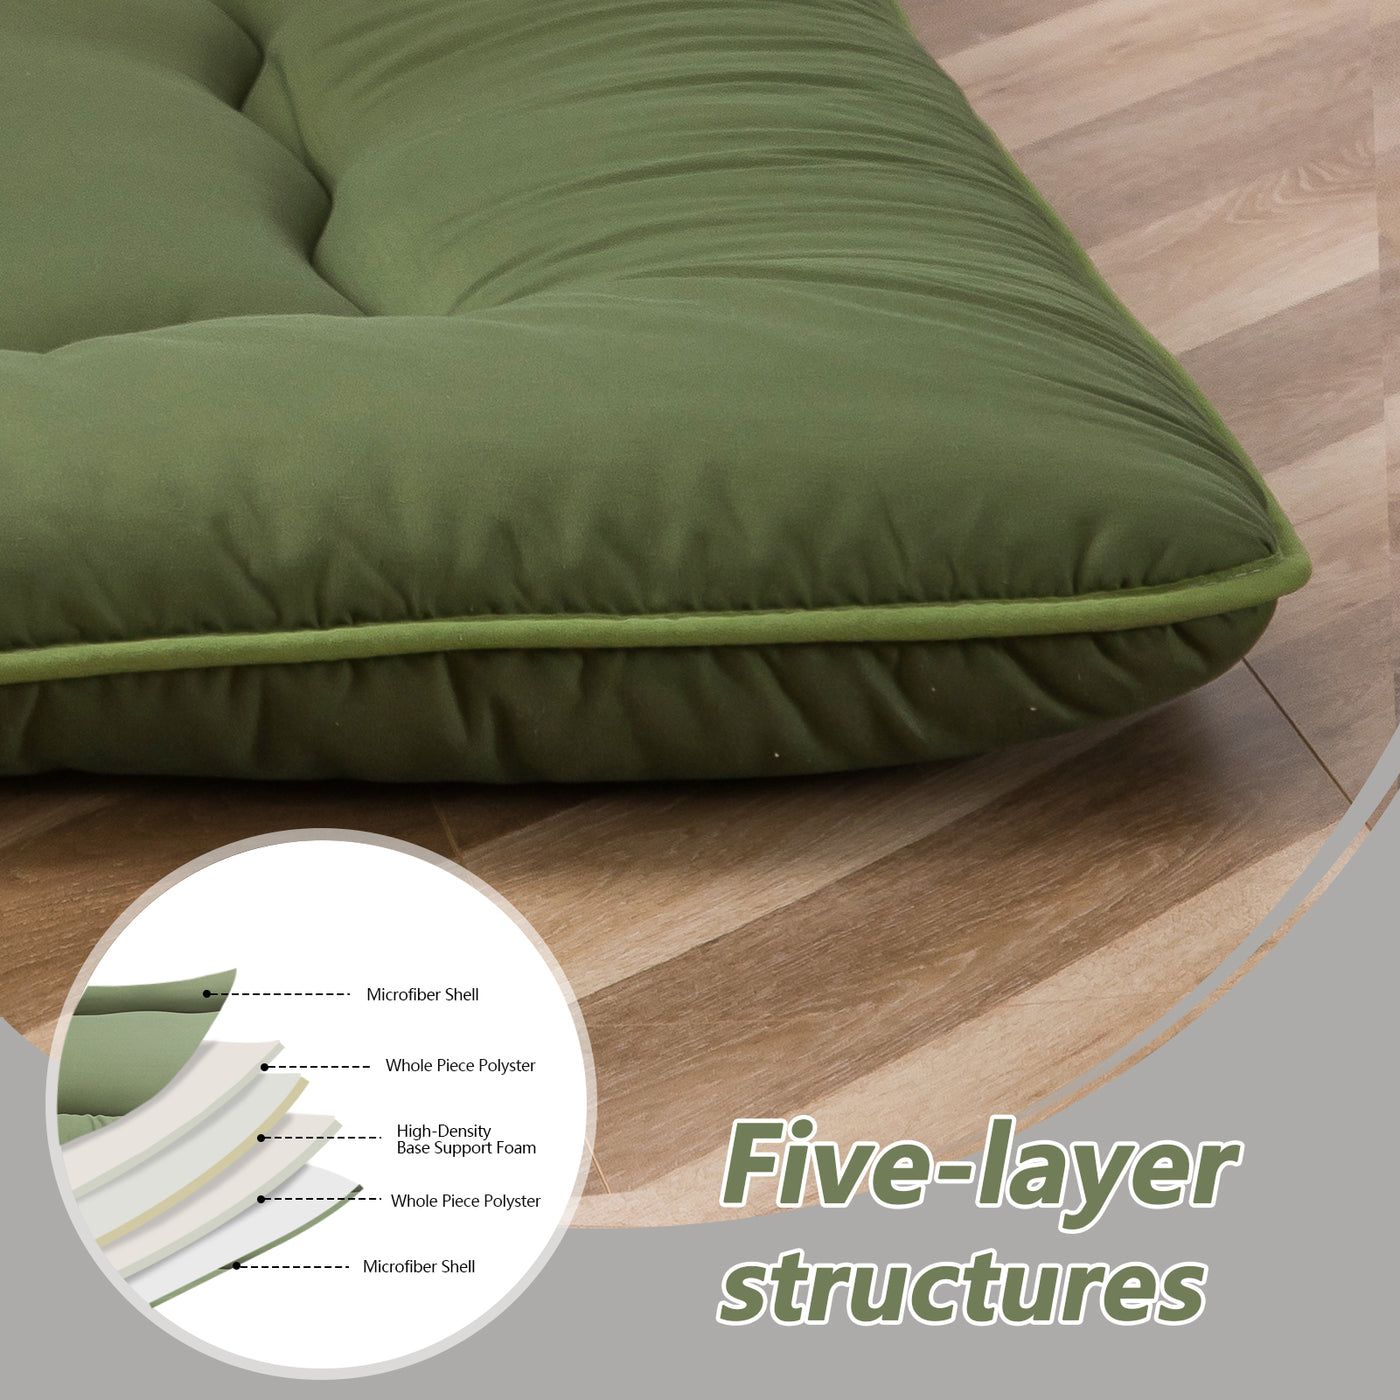 floor mattress#color_green